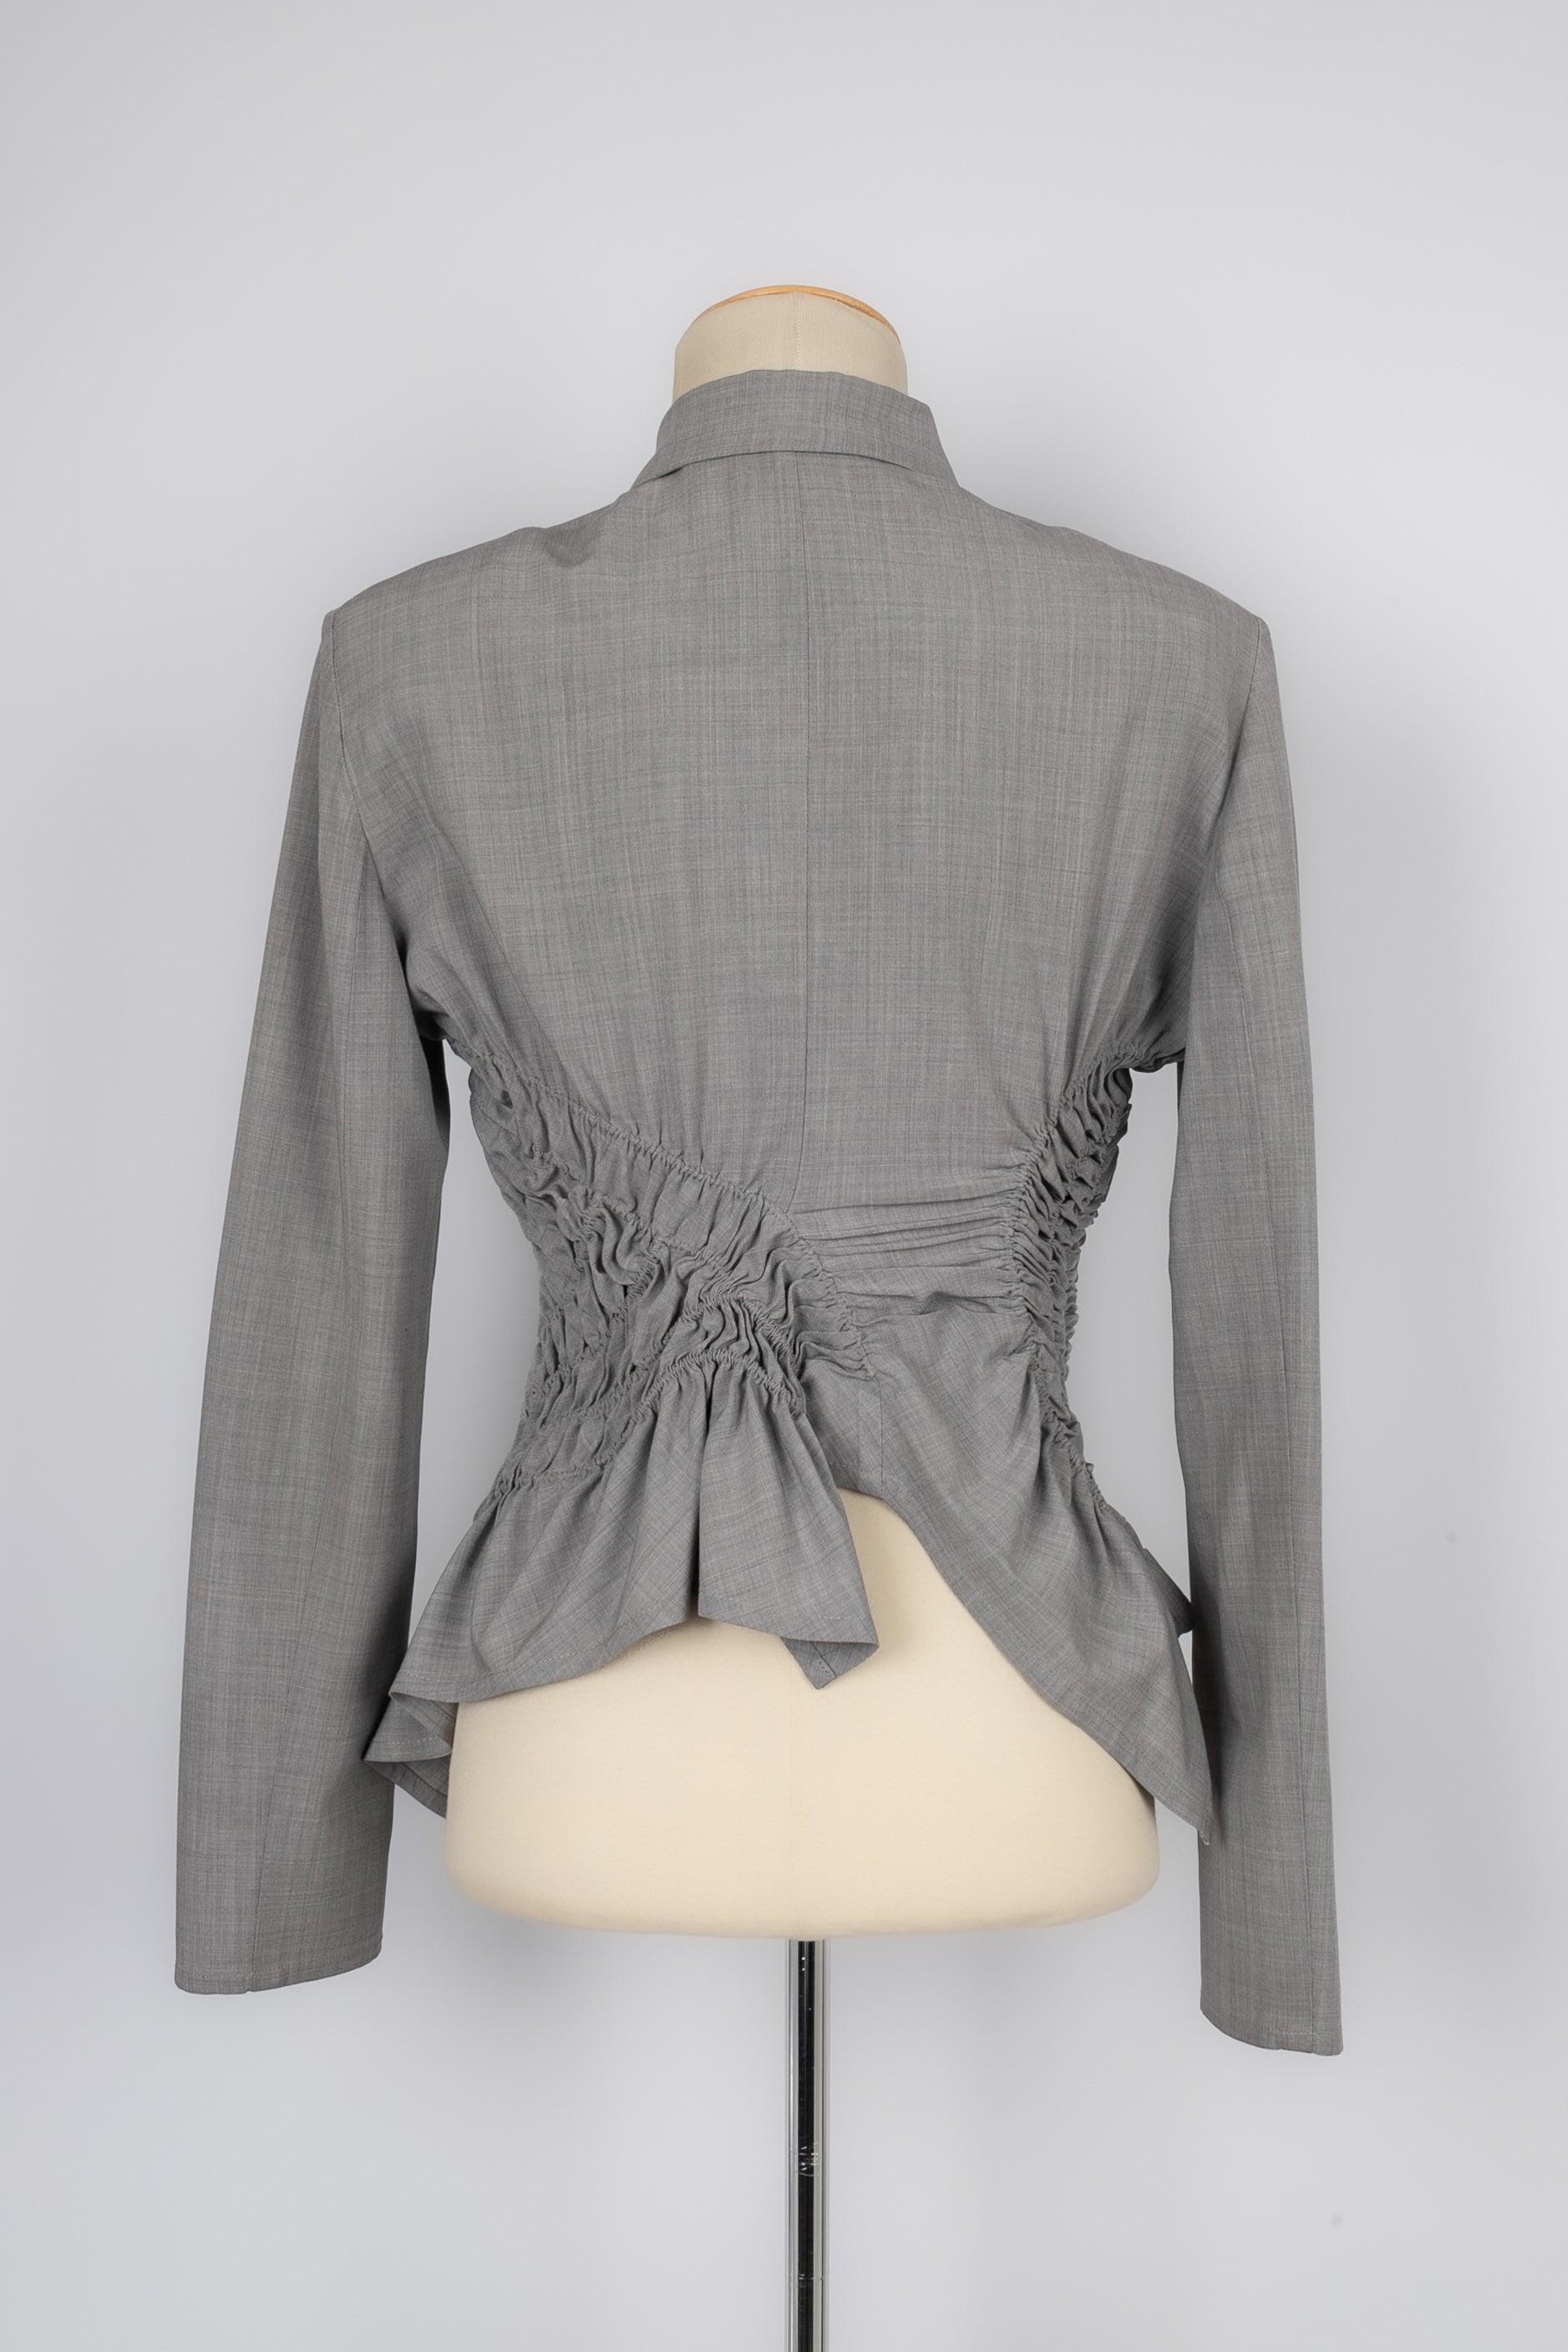 Dior Grey Blended Wool Short Jacket, 2001 In Excellent Condition For Sale In SAINT-OUEN-SUR-SEINE, FR